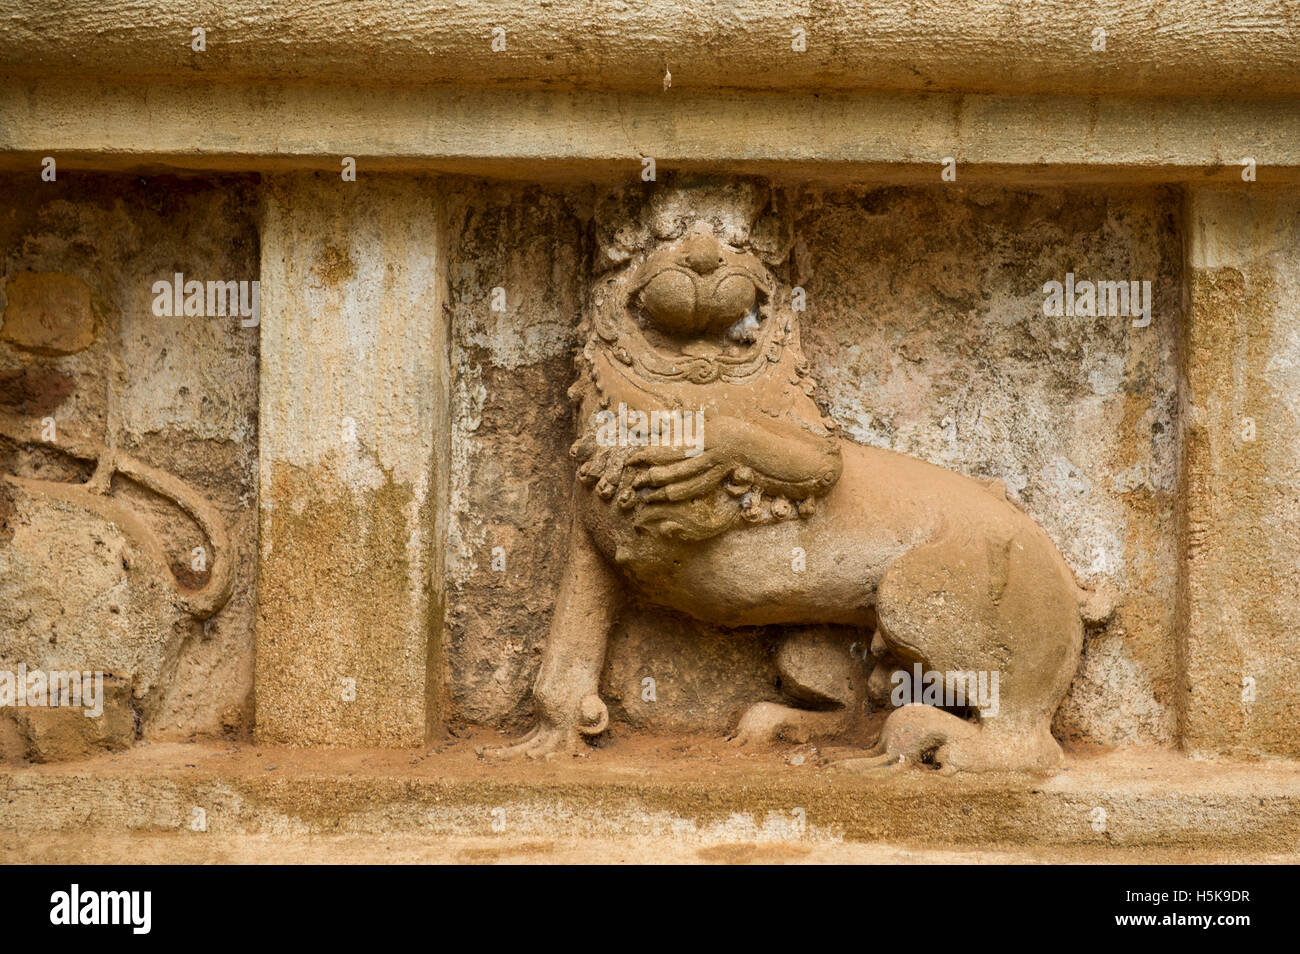 Thivanka Image House in the Ancient City of Polonnaruwa, Sri Lanka Stock Photo